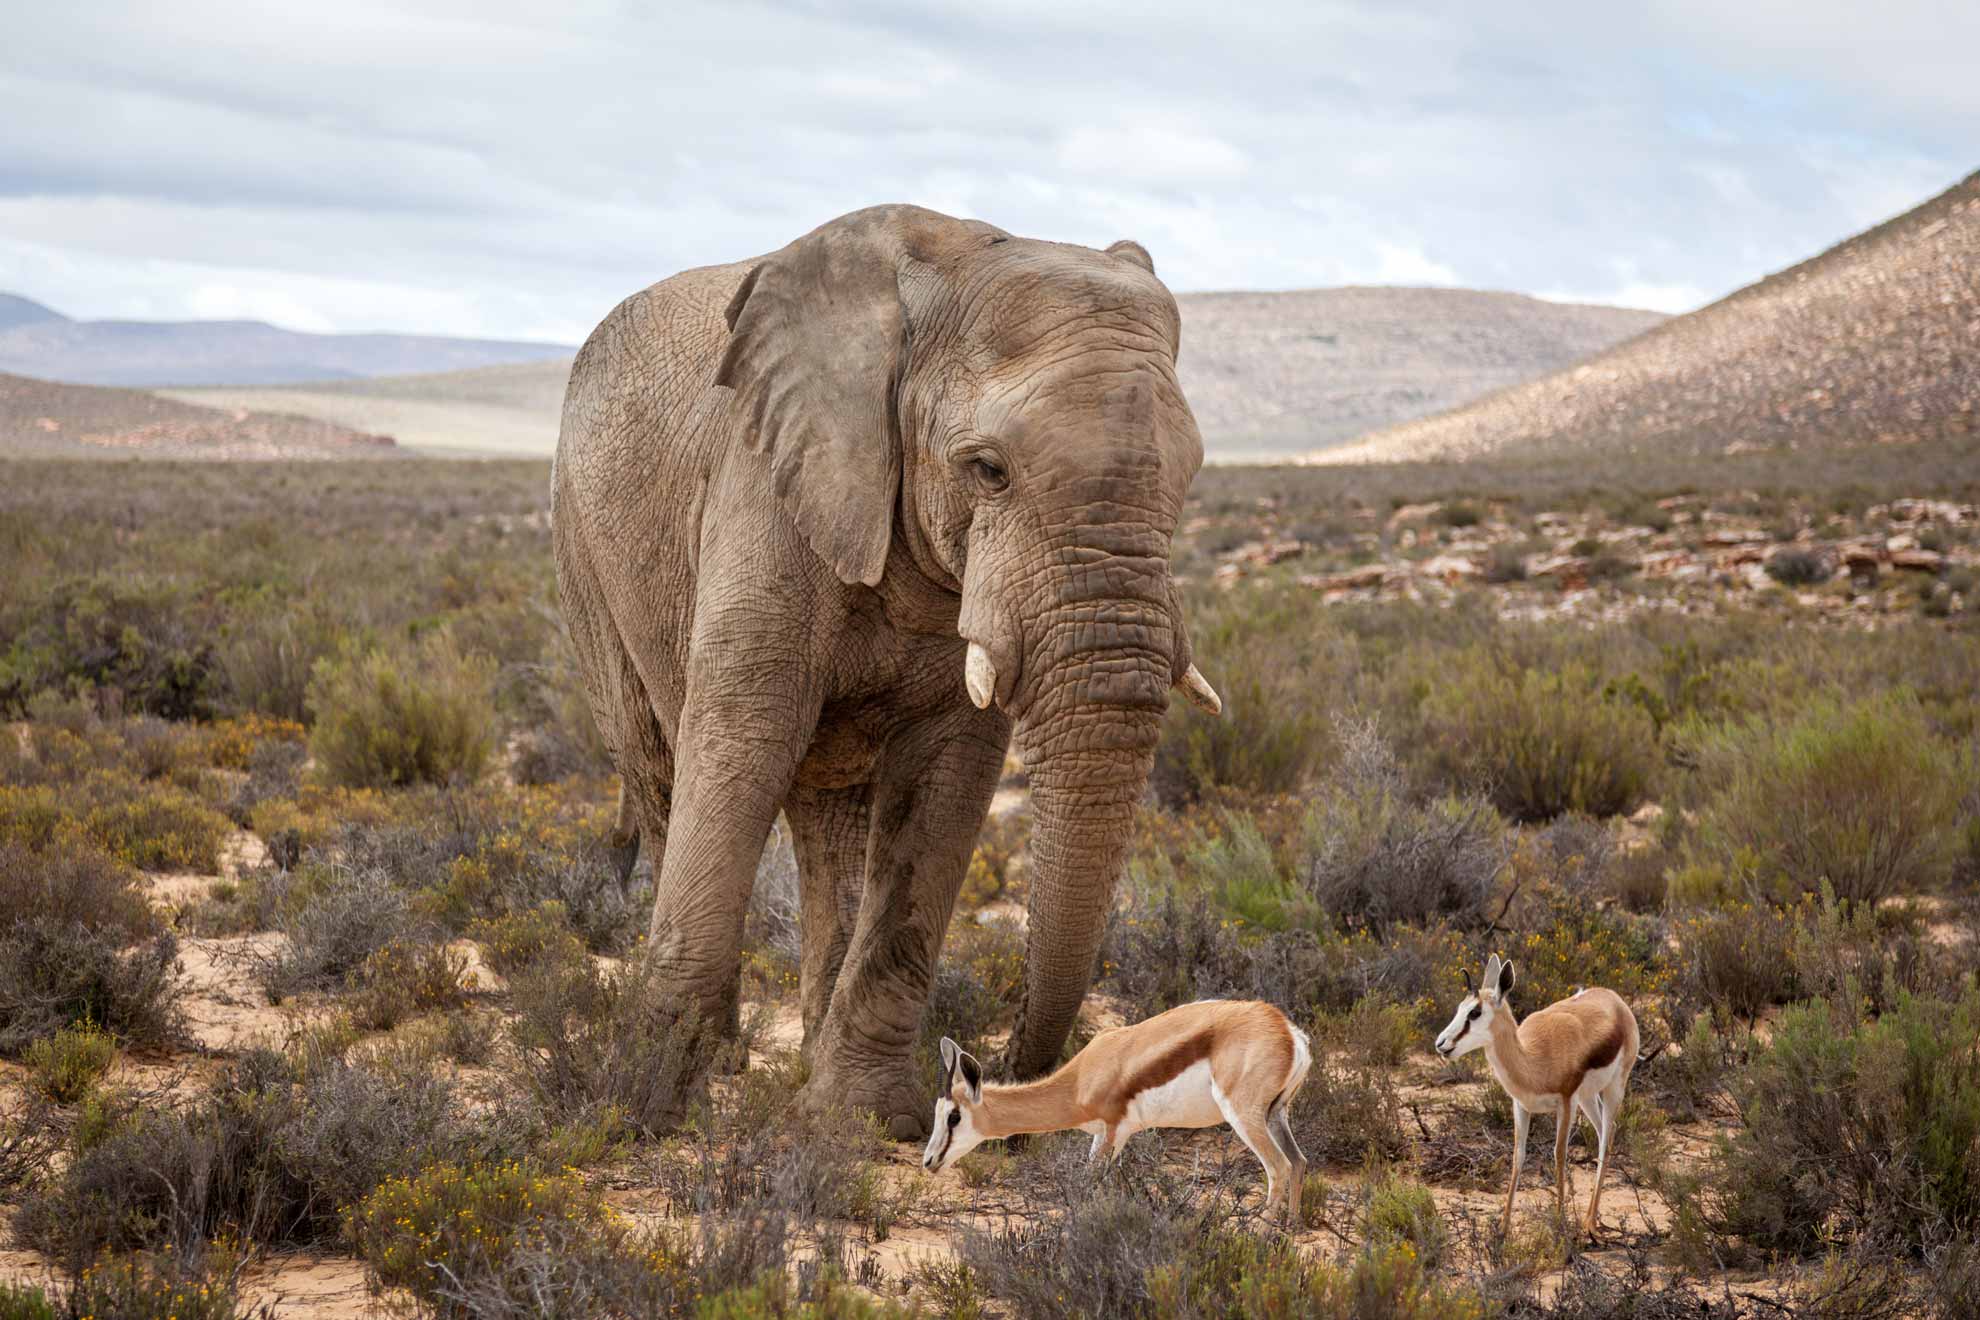 Aquila Elephants and Springbok